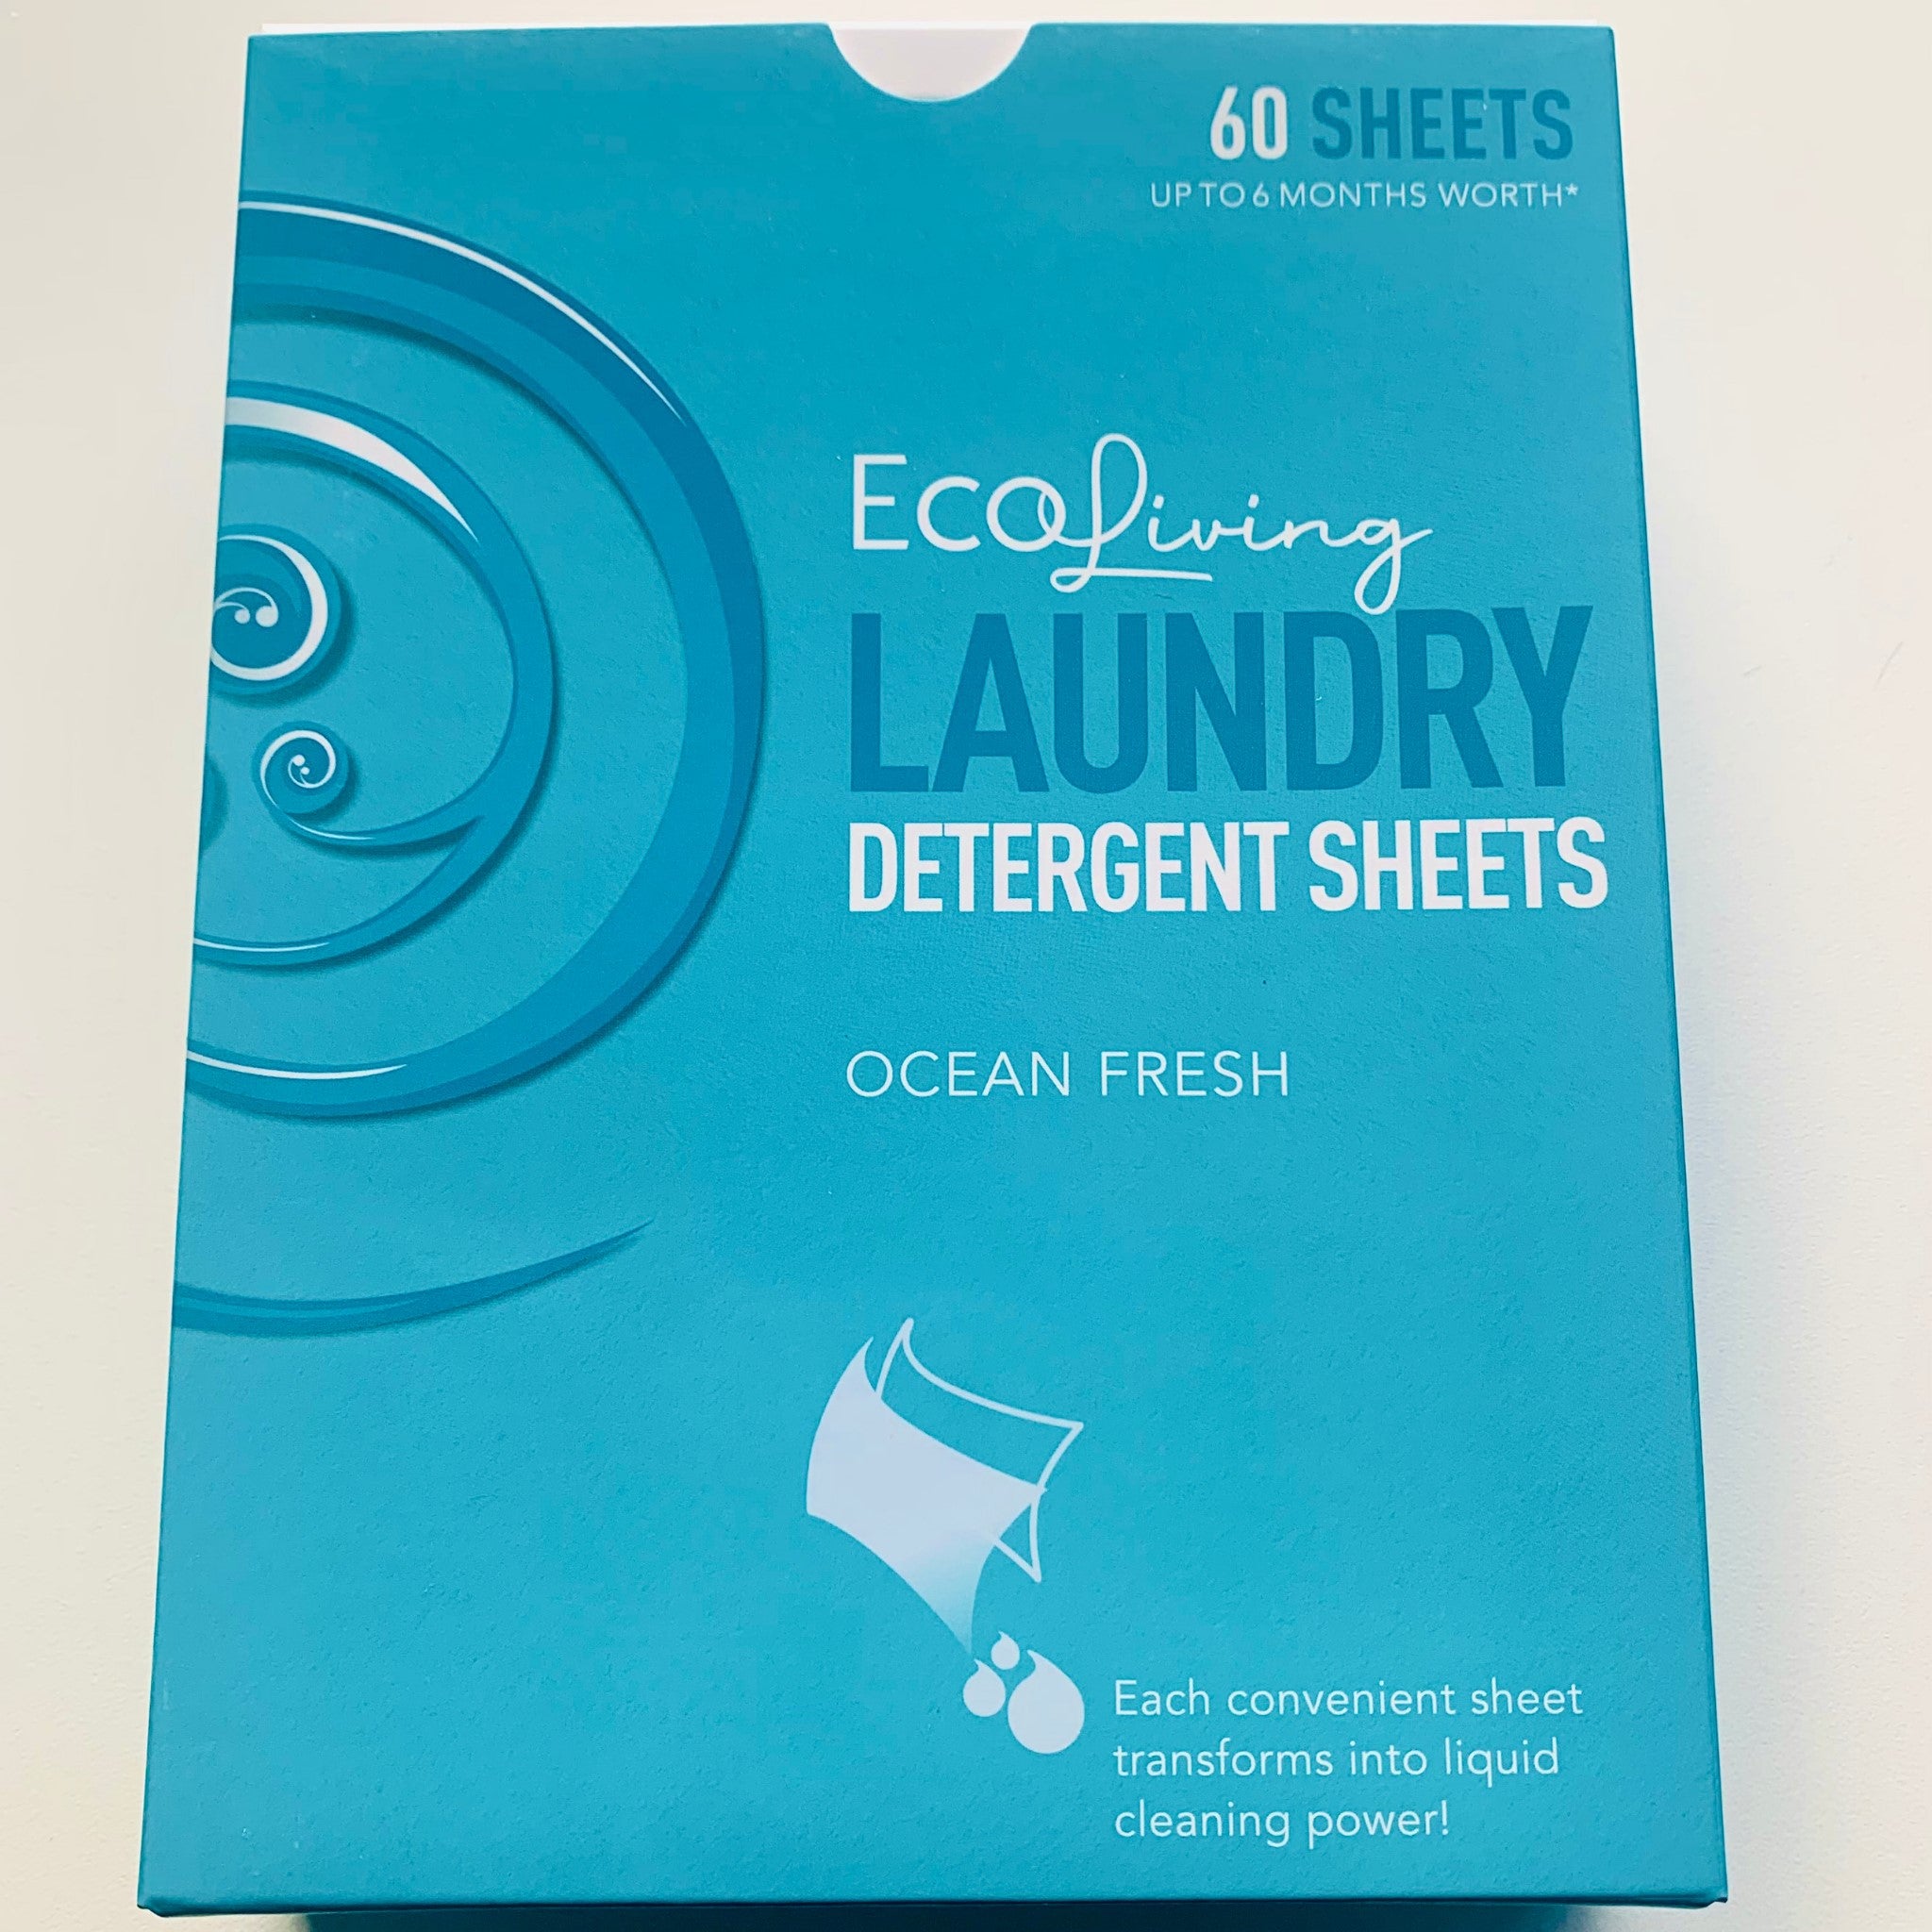 Ocean Fresh Laundry Detergent Sheets - 60 sheets